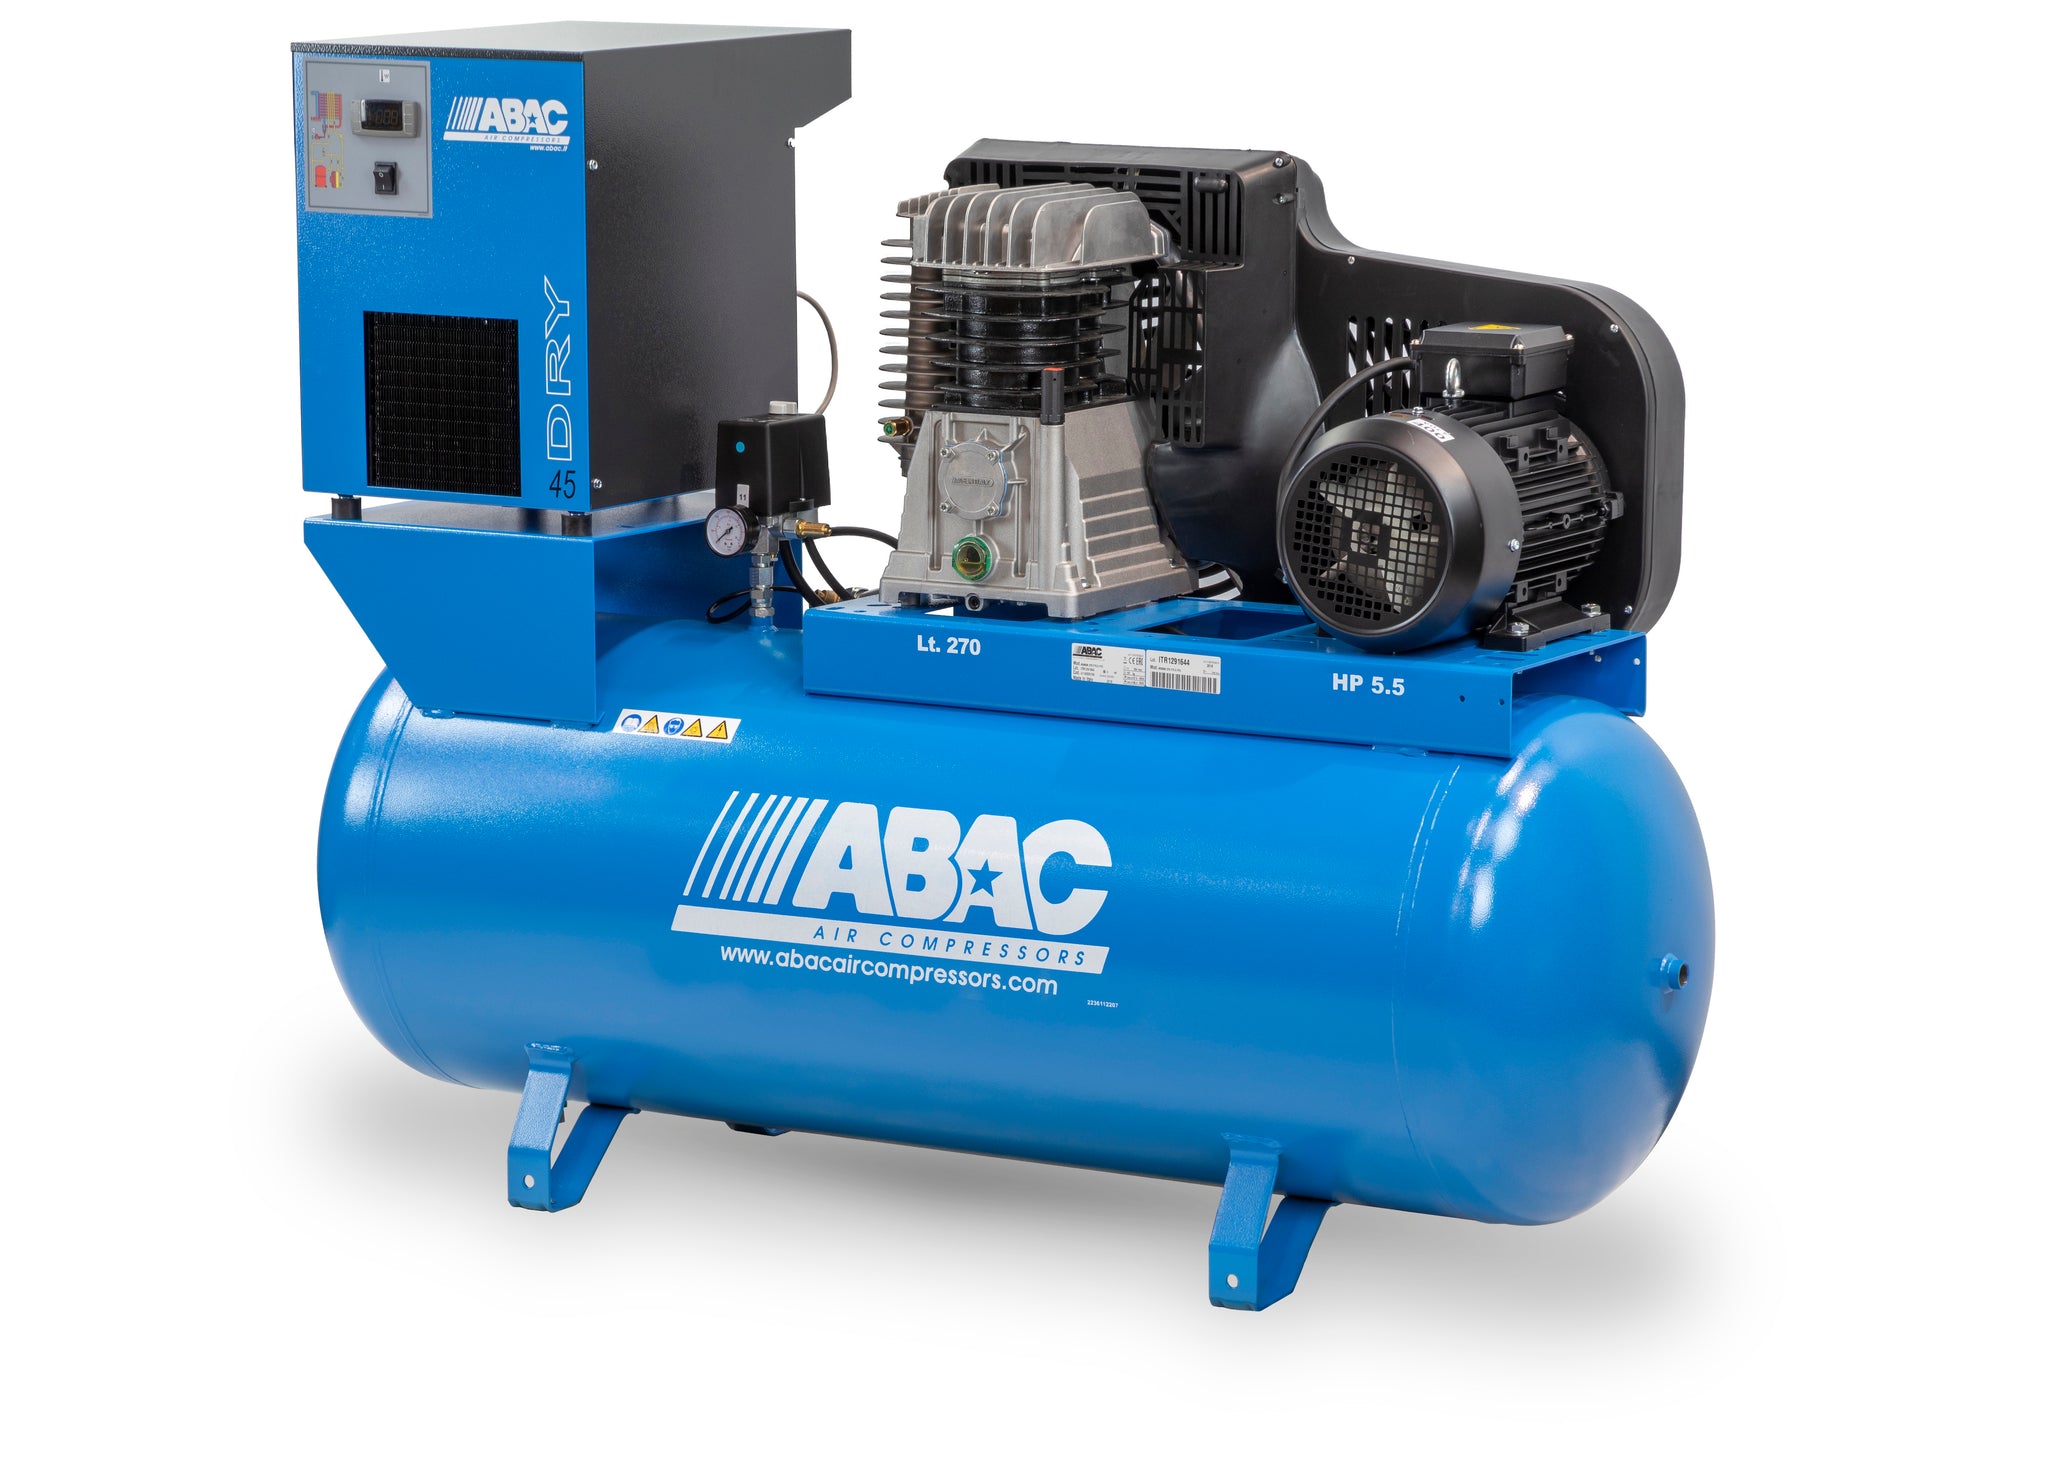 ABAC Kompressor PRO B5900B 270 VT5,5 I DF Druckluft-Fachhandel